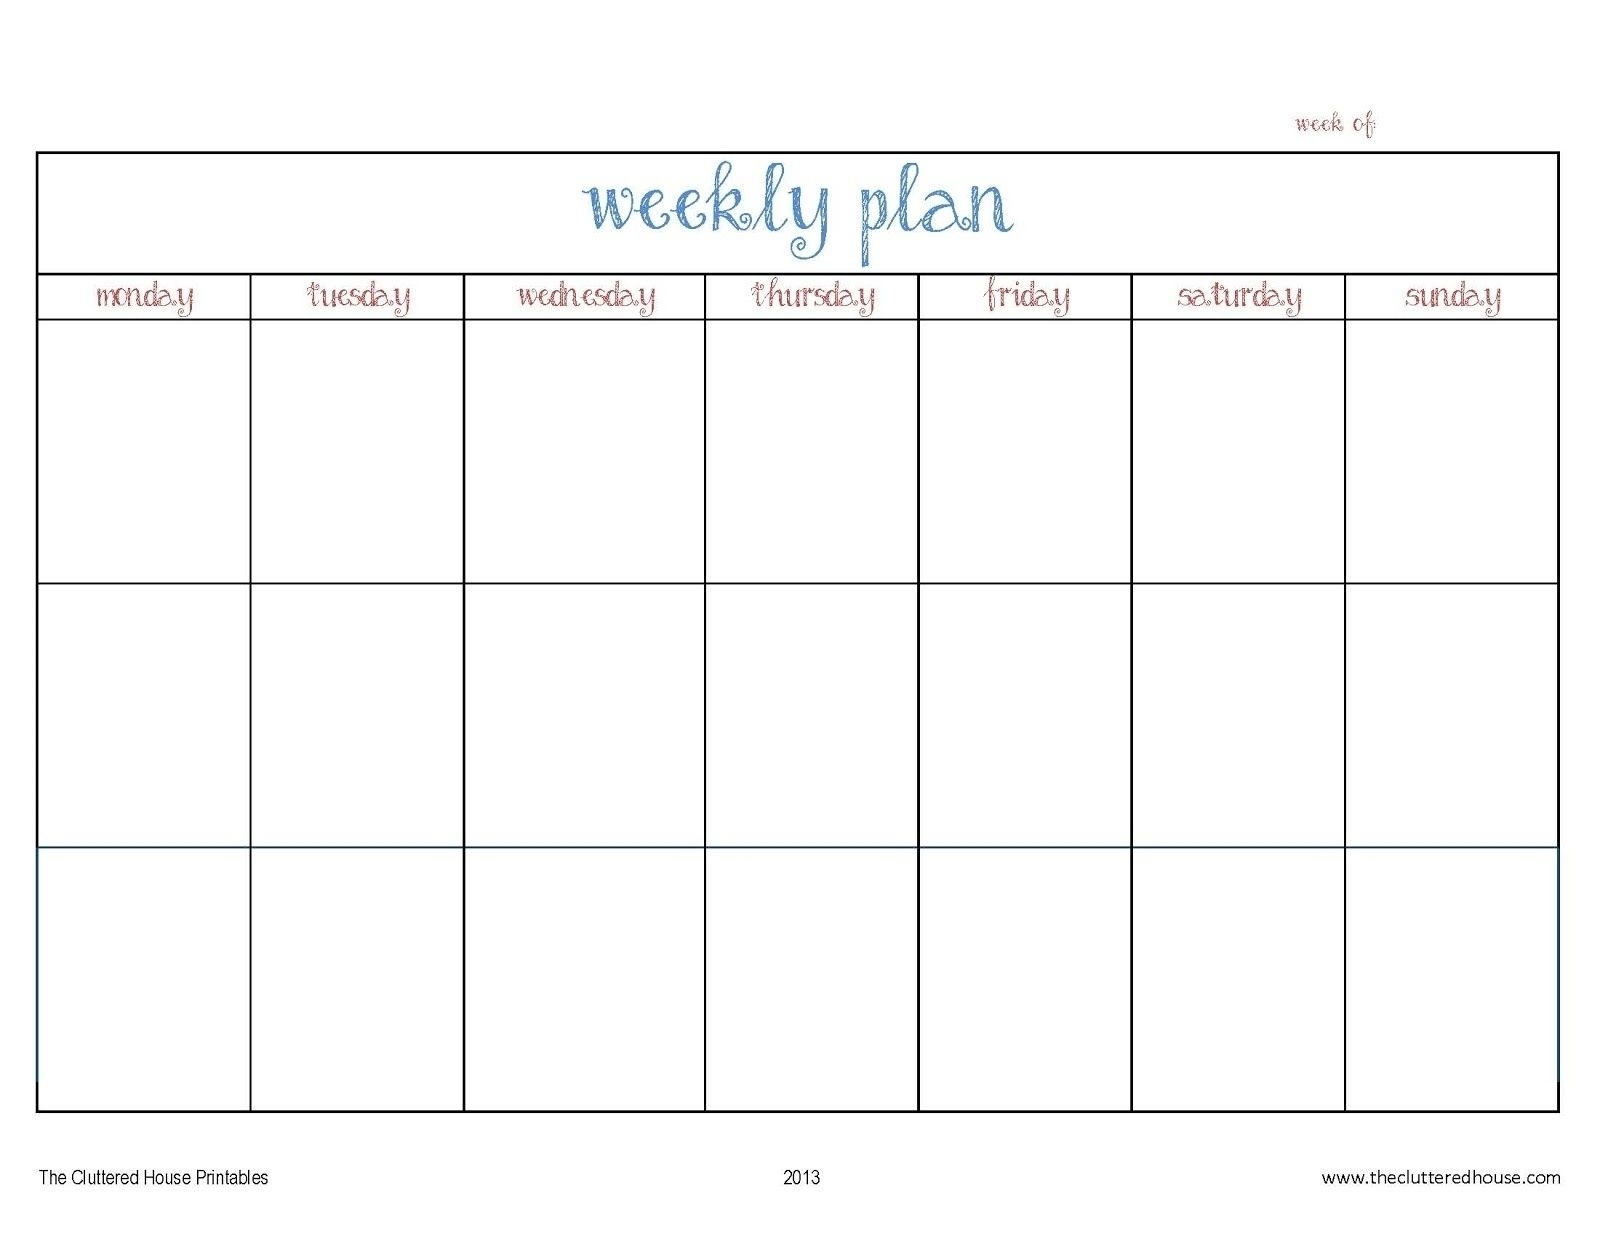 Day Lank Calendar Free Week Template Printable Schedule | Smorad throughout Blank 7 Day Calendar Template